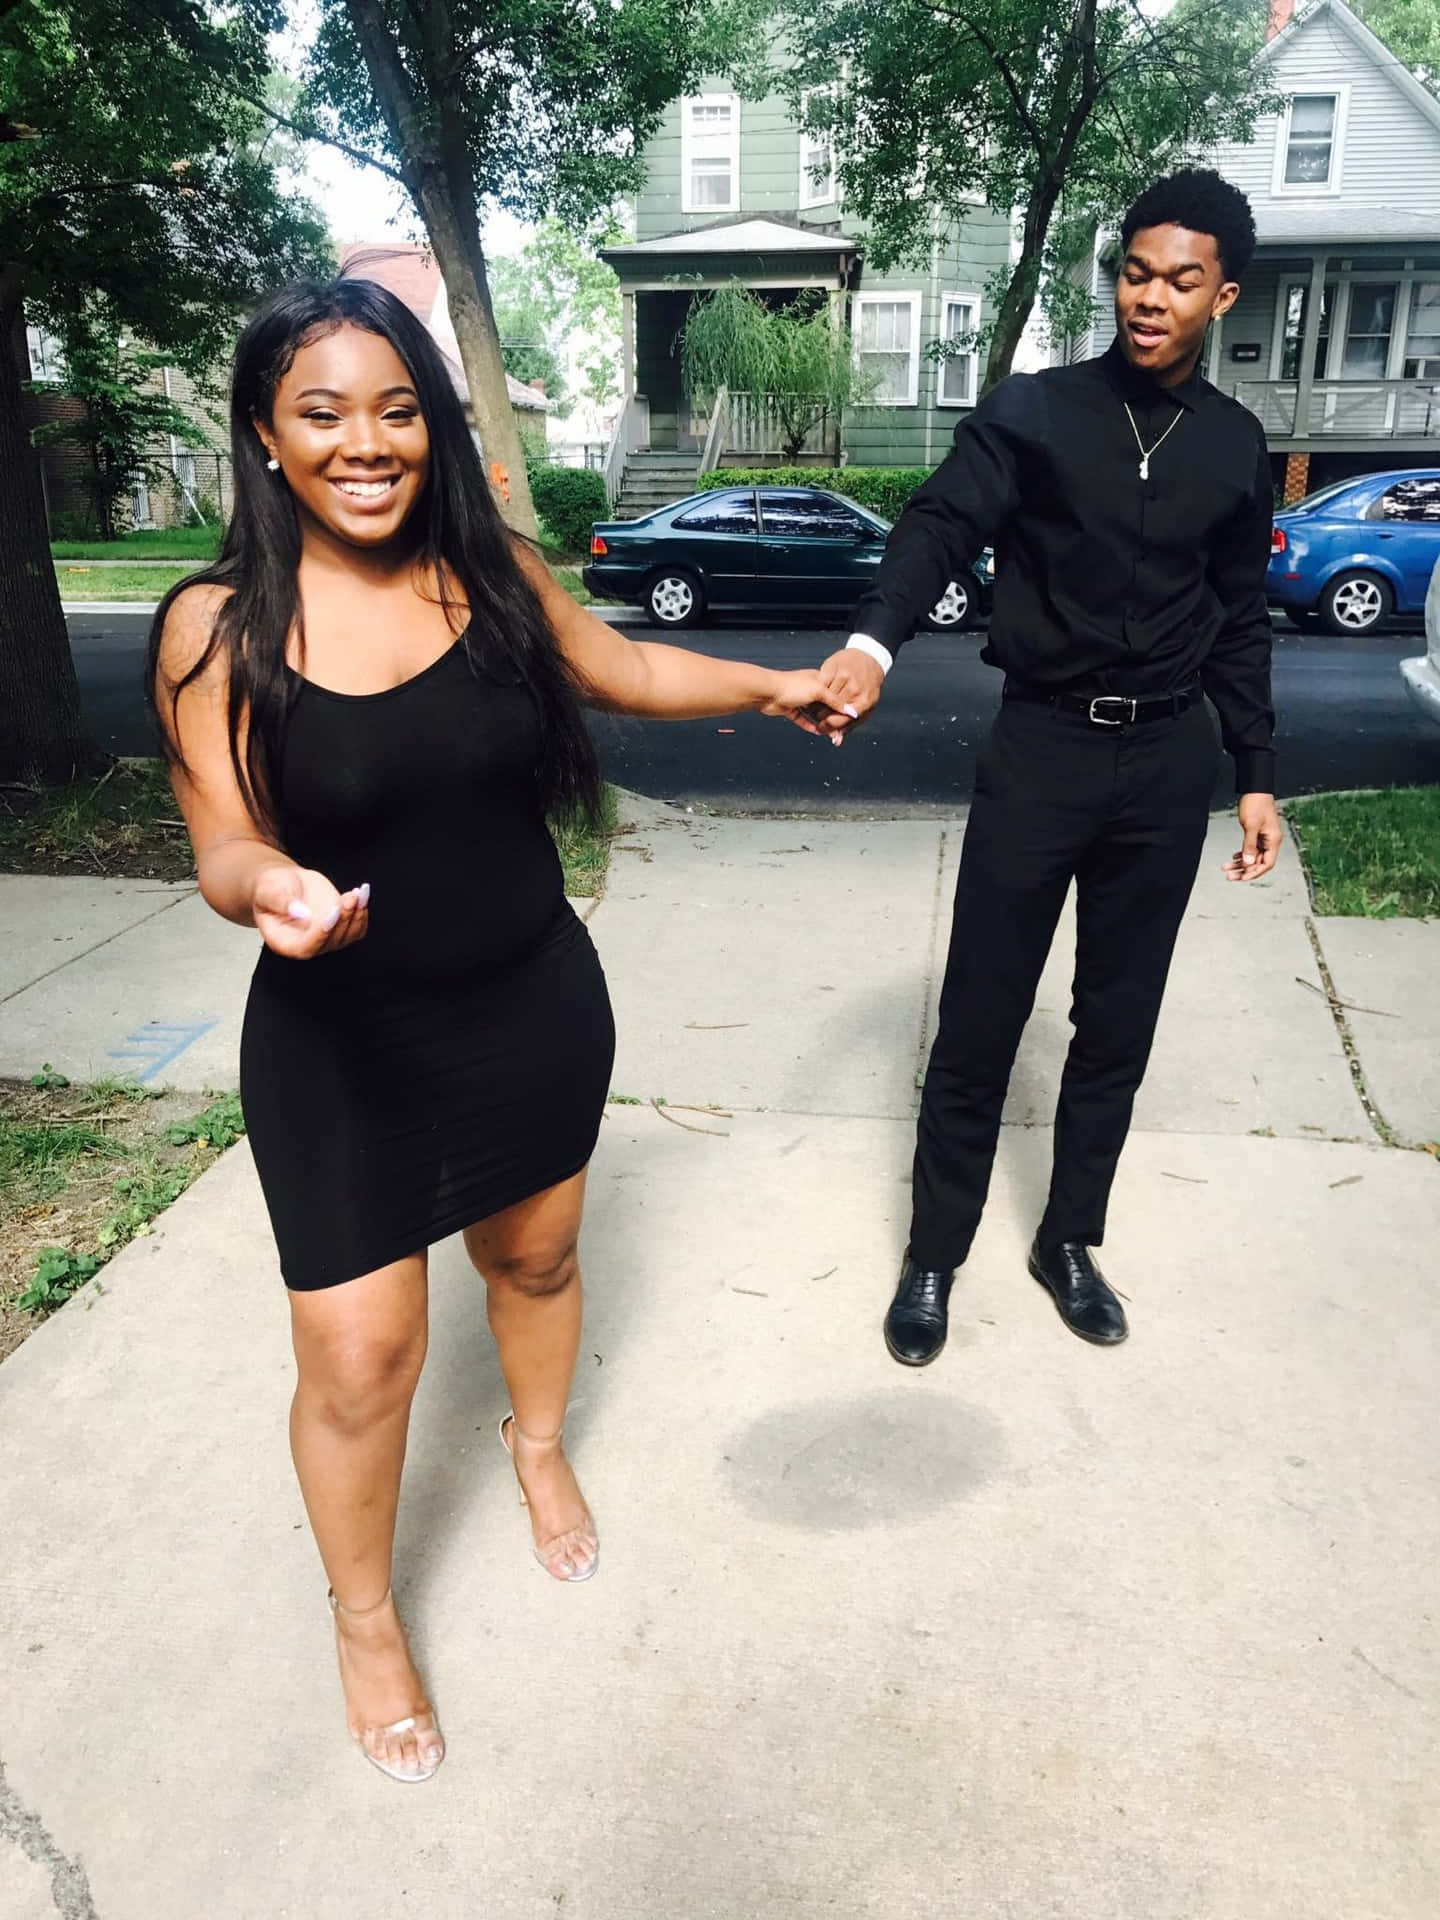 100+] Cute Black Couple Pictures